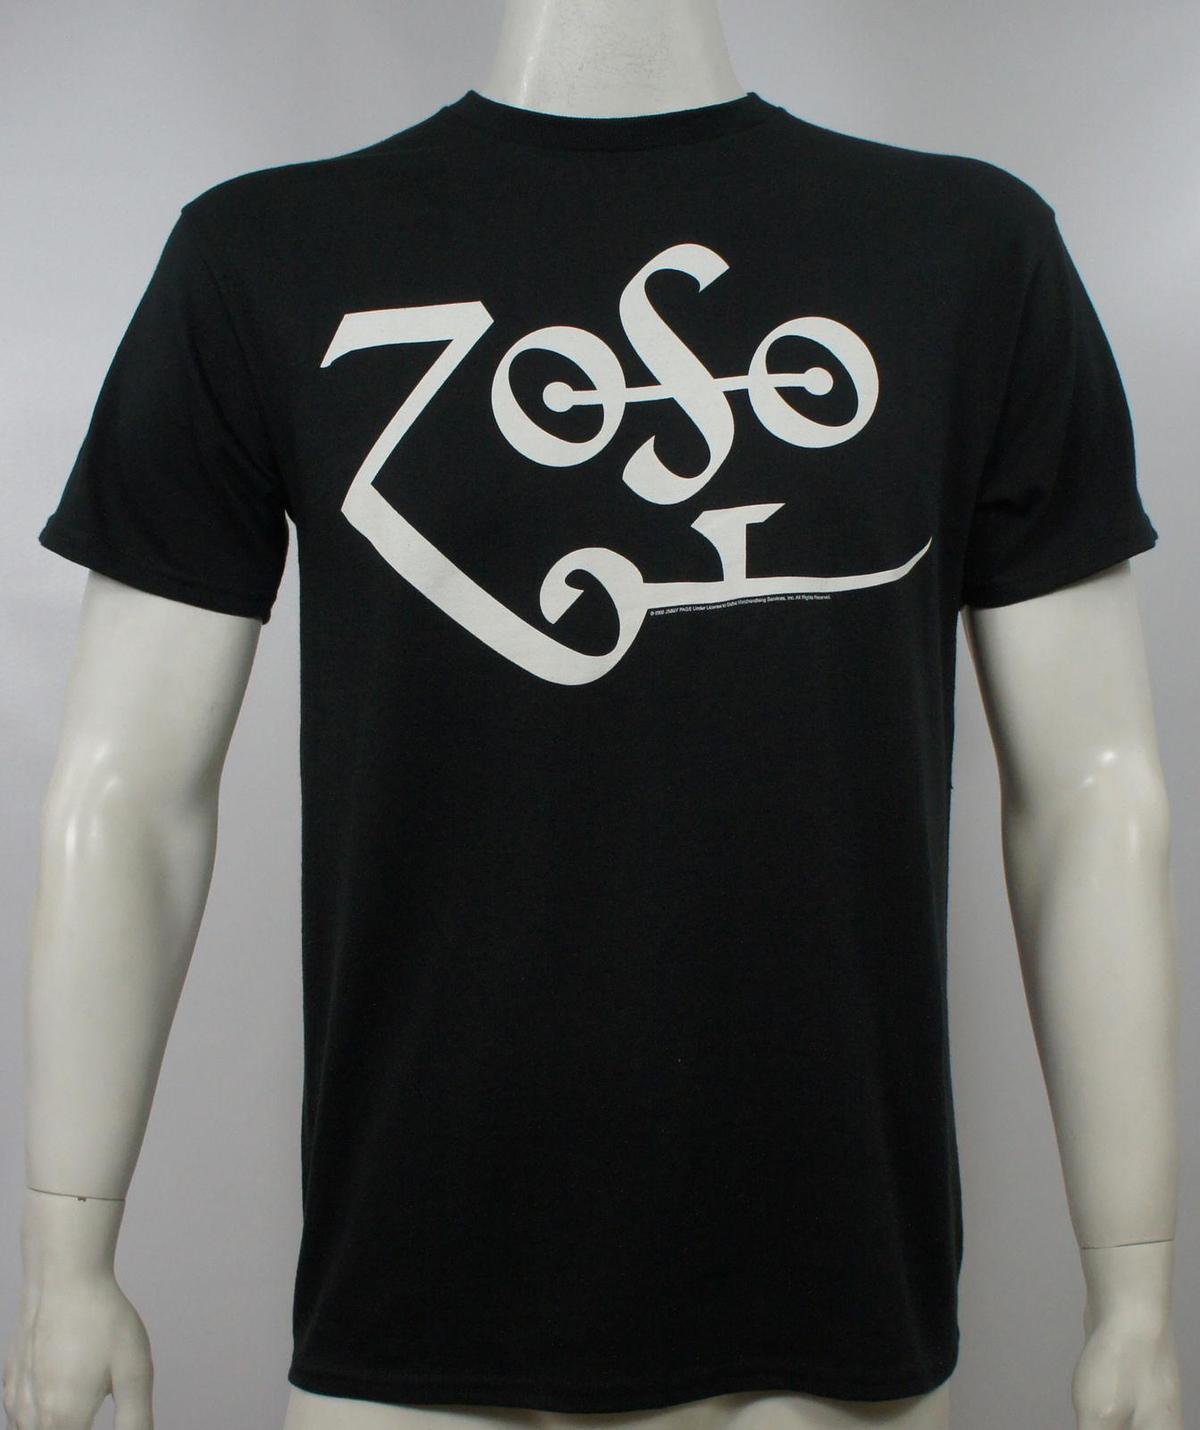 Zoso Logo - Authentic JIMMY PAGE White Zoso Logo Led Zeppelin T-Shirt S M L XL 2XL NEW